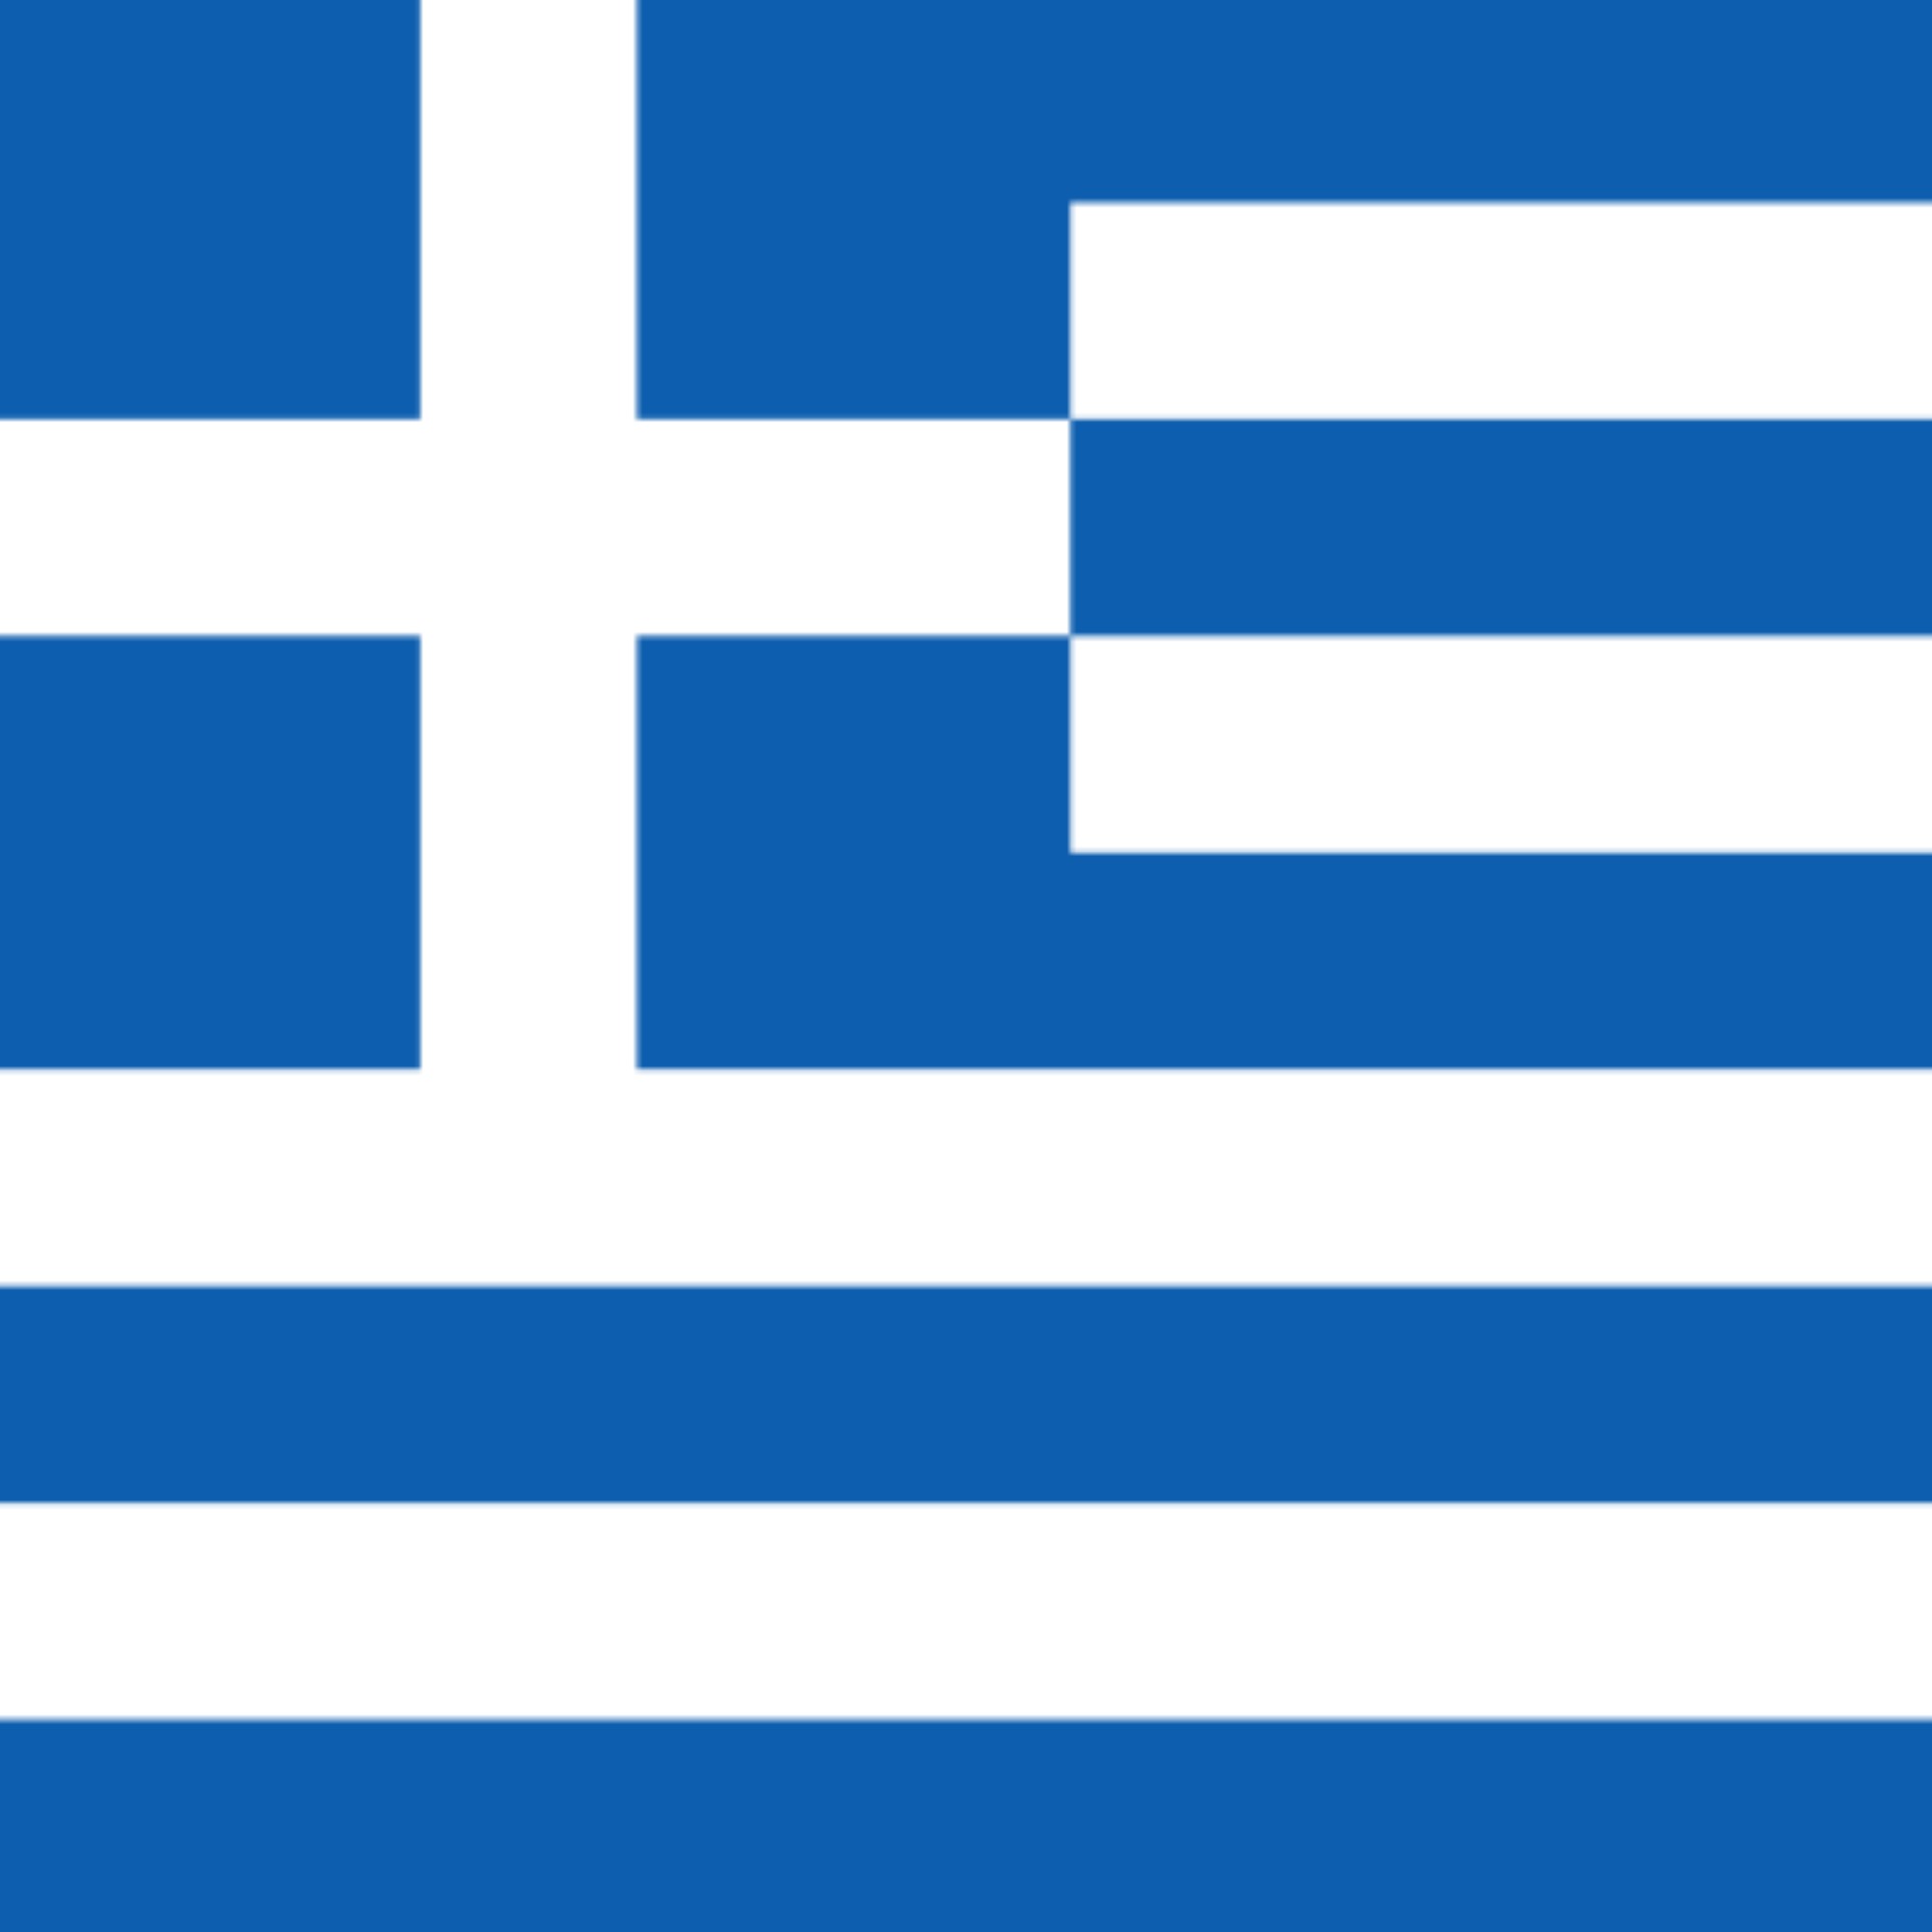 Honorary Consulate of Greece (Elx)